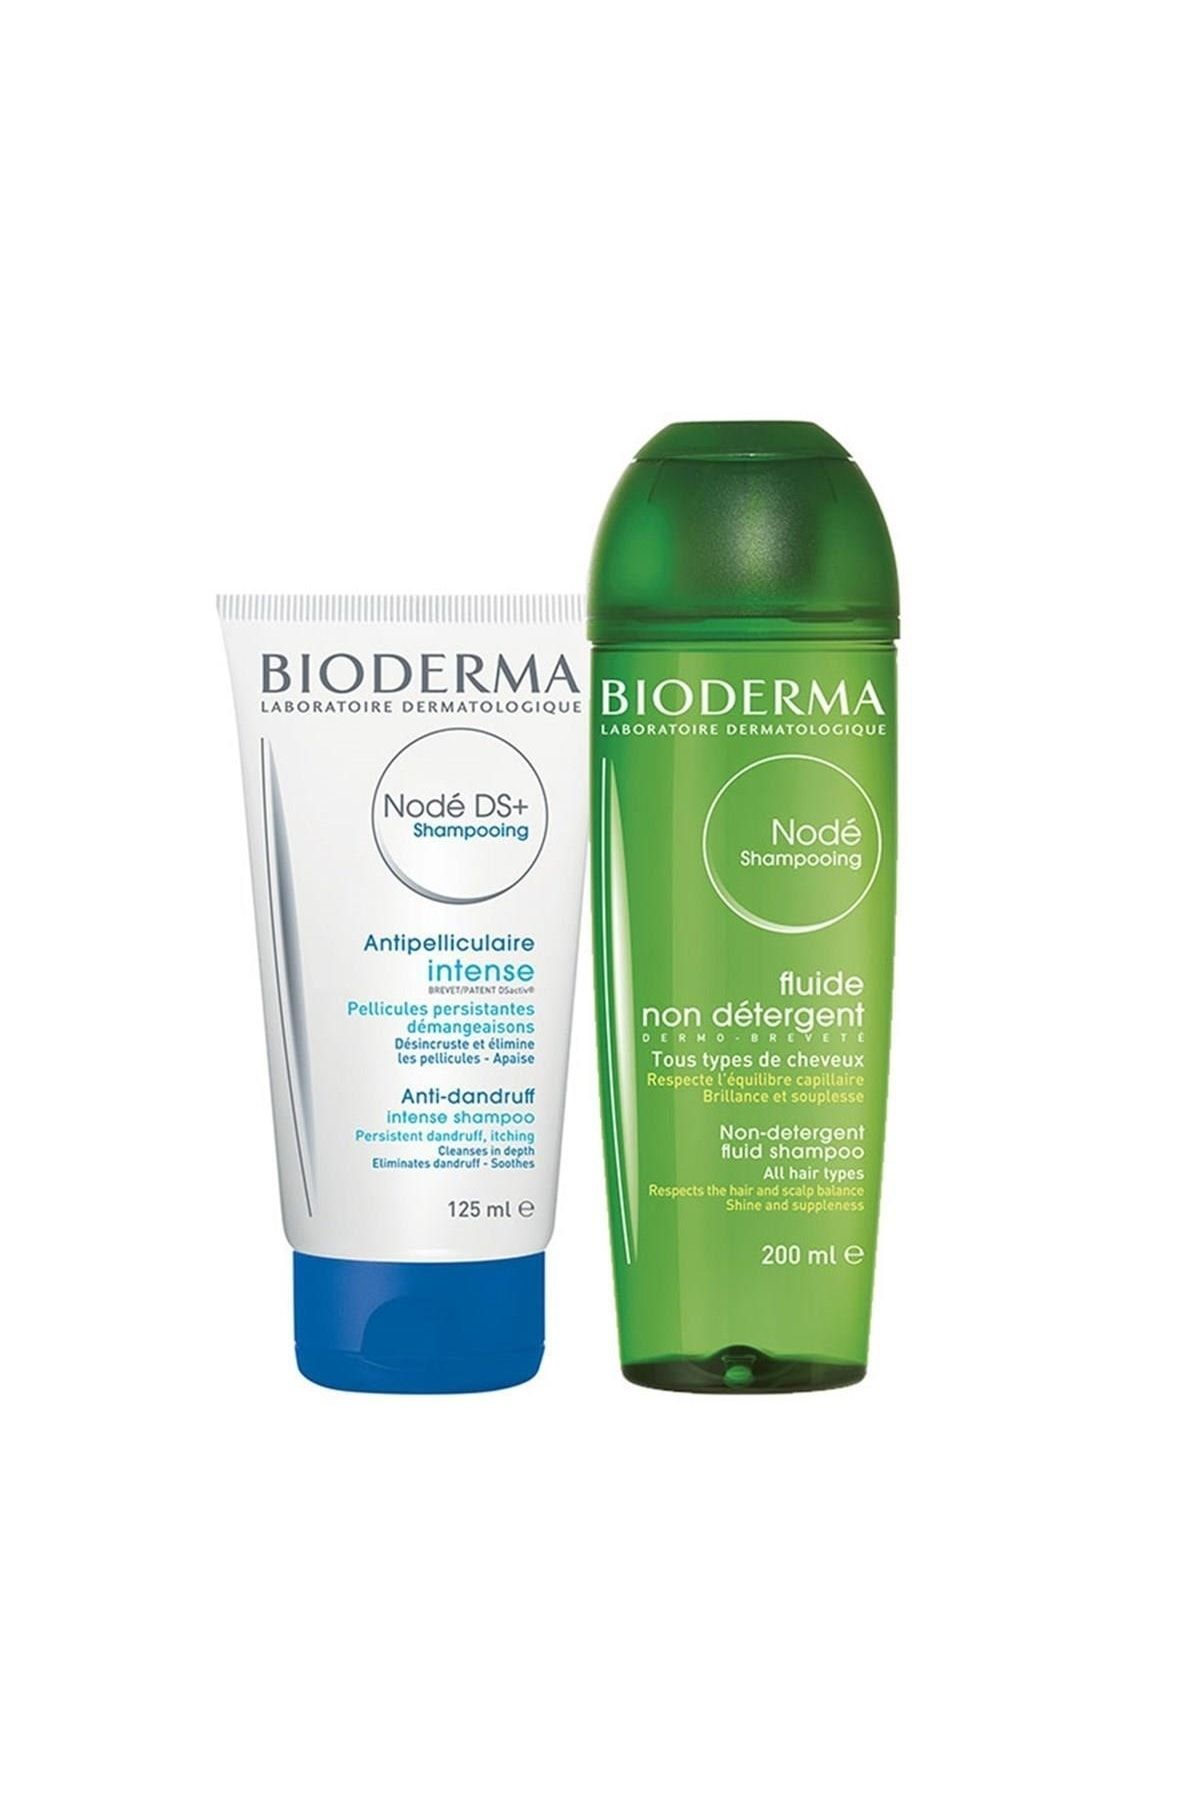 Bioderma Node Ds+ Shampoo 125 ml+ Node Fluid Shampoo 200ml